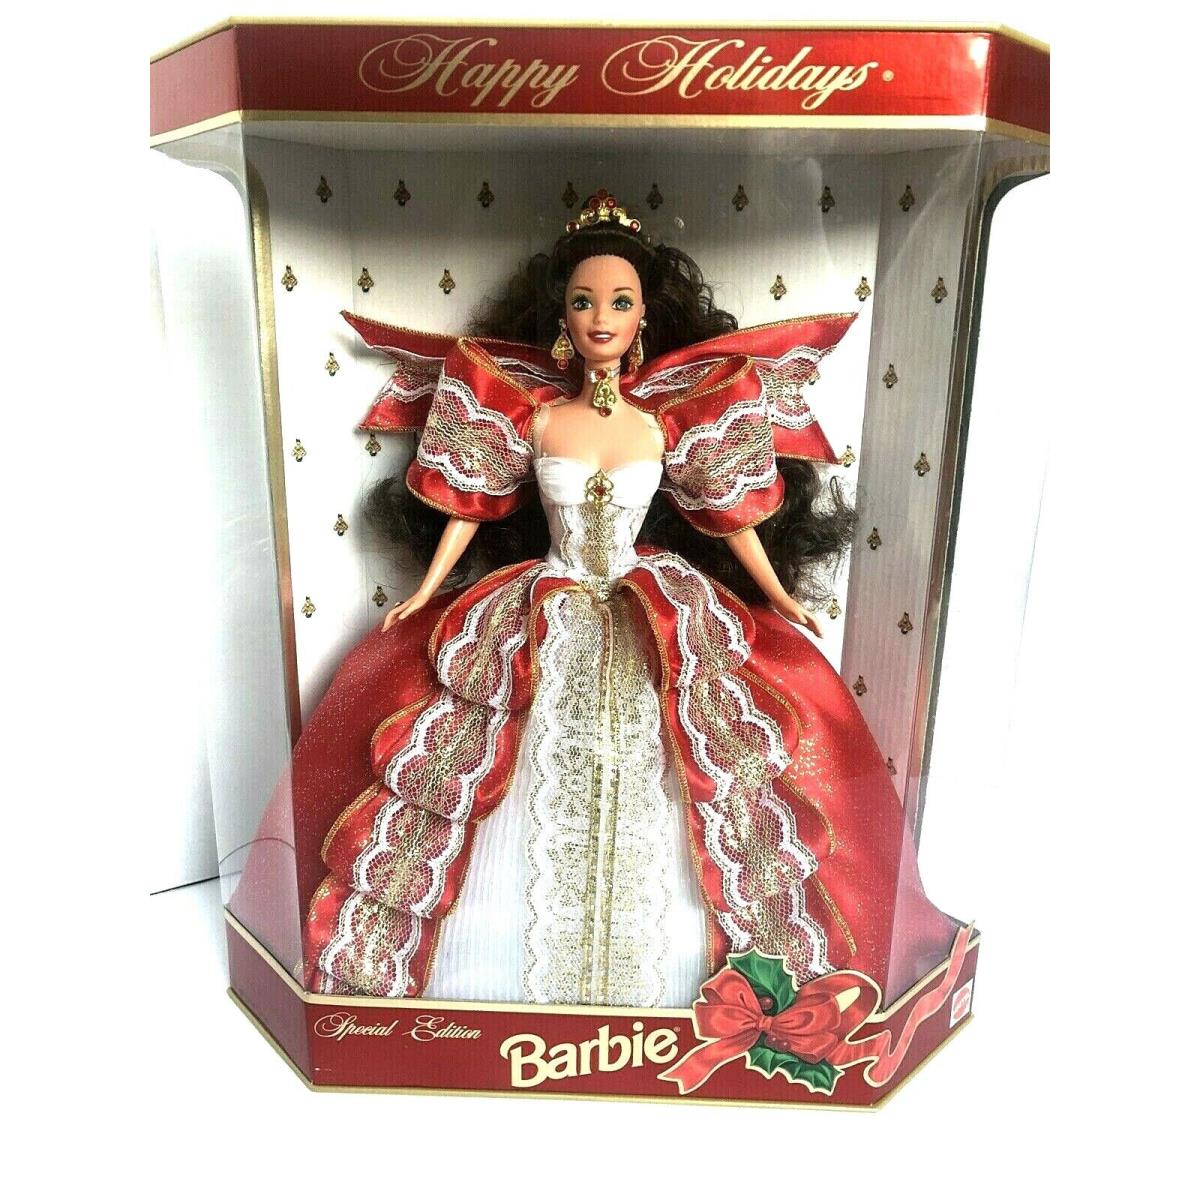 1997 Vtg Happy Holidays 10th Anniversary Special Edition Barbie Doll Mattel Mib